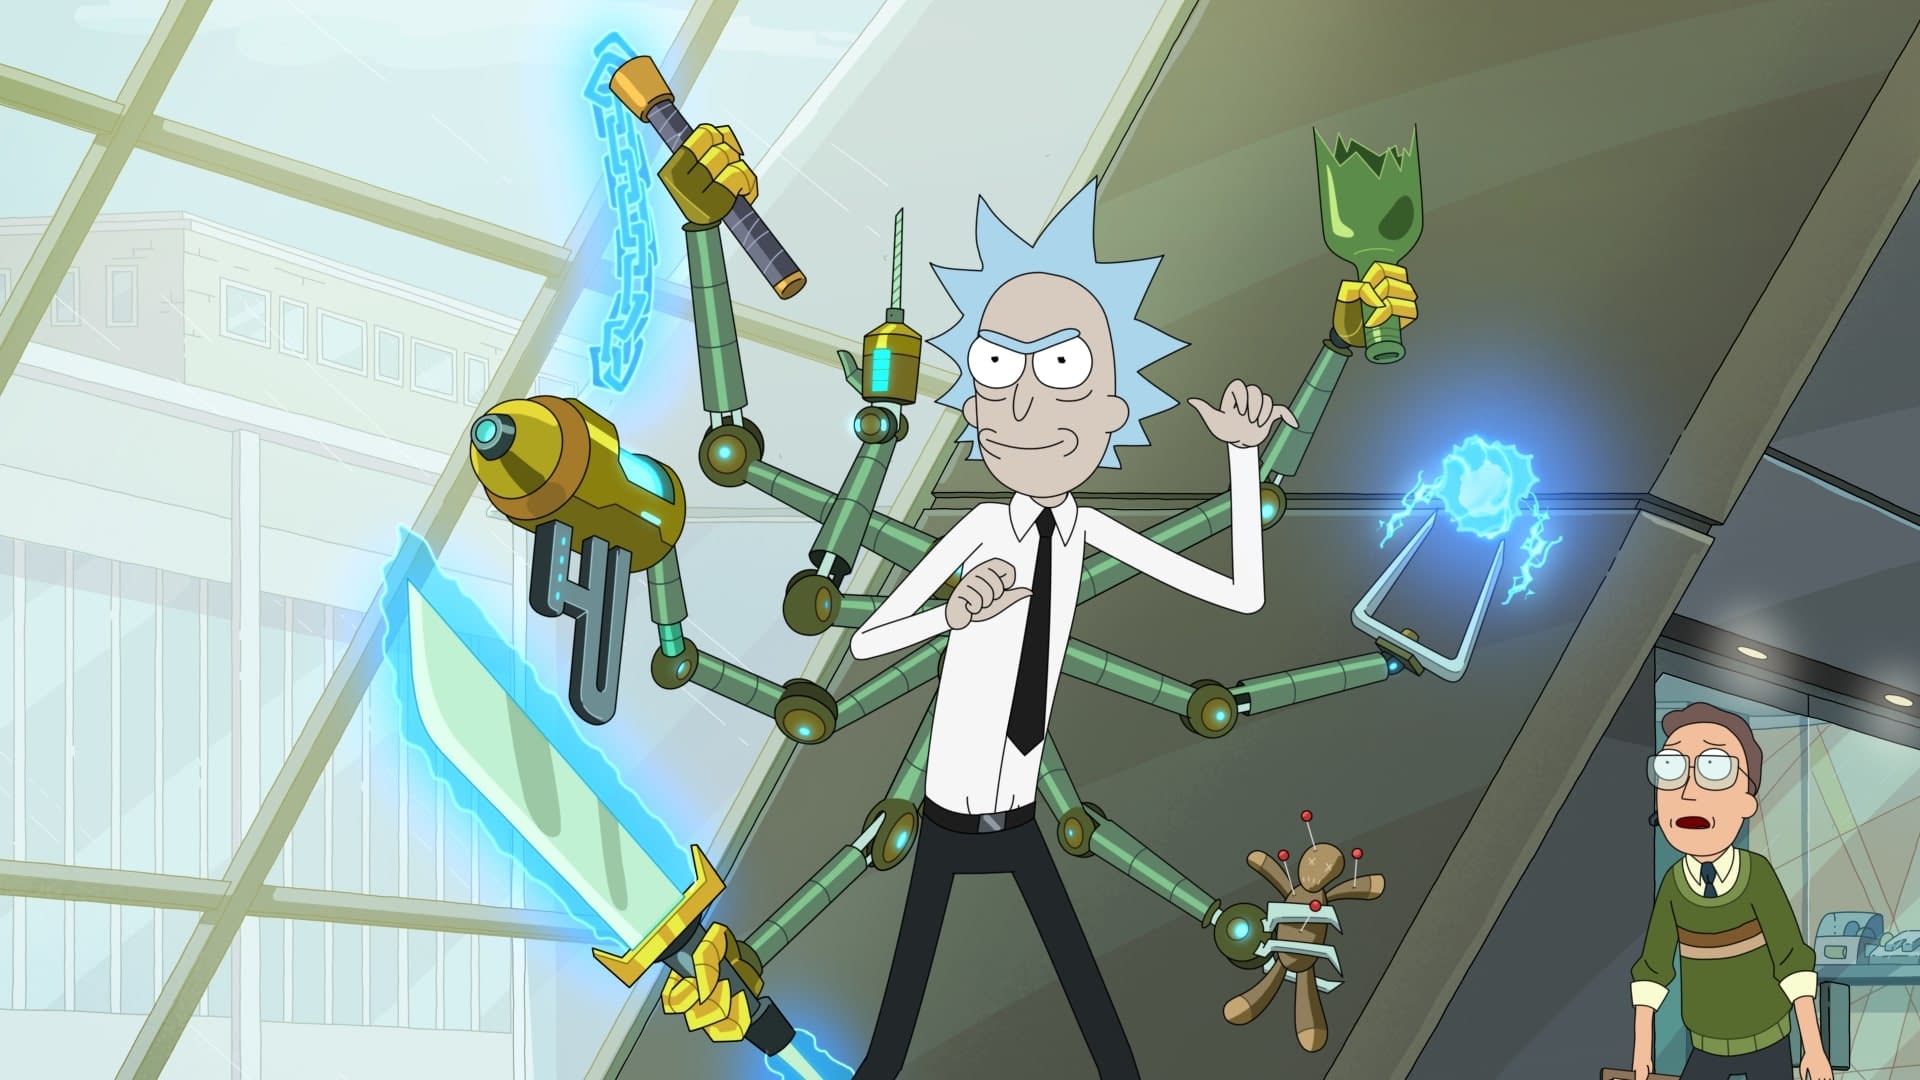 Rick and Morty Posts New Season 6 Image Ahead of S06E01 Solaricks!